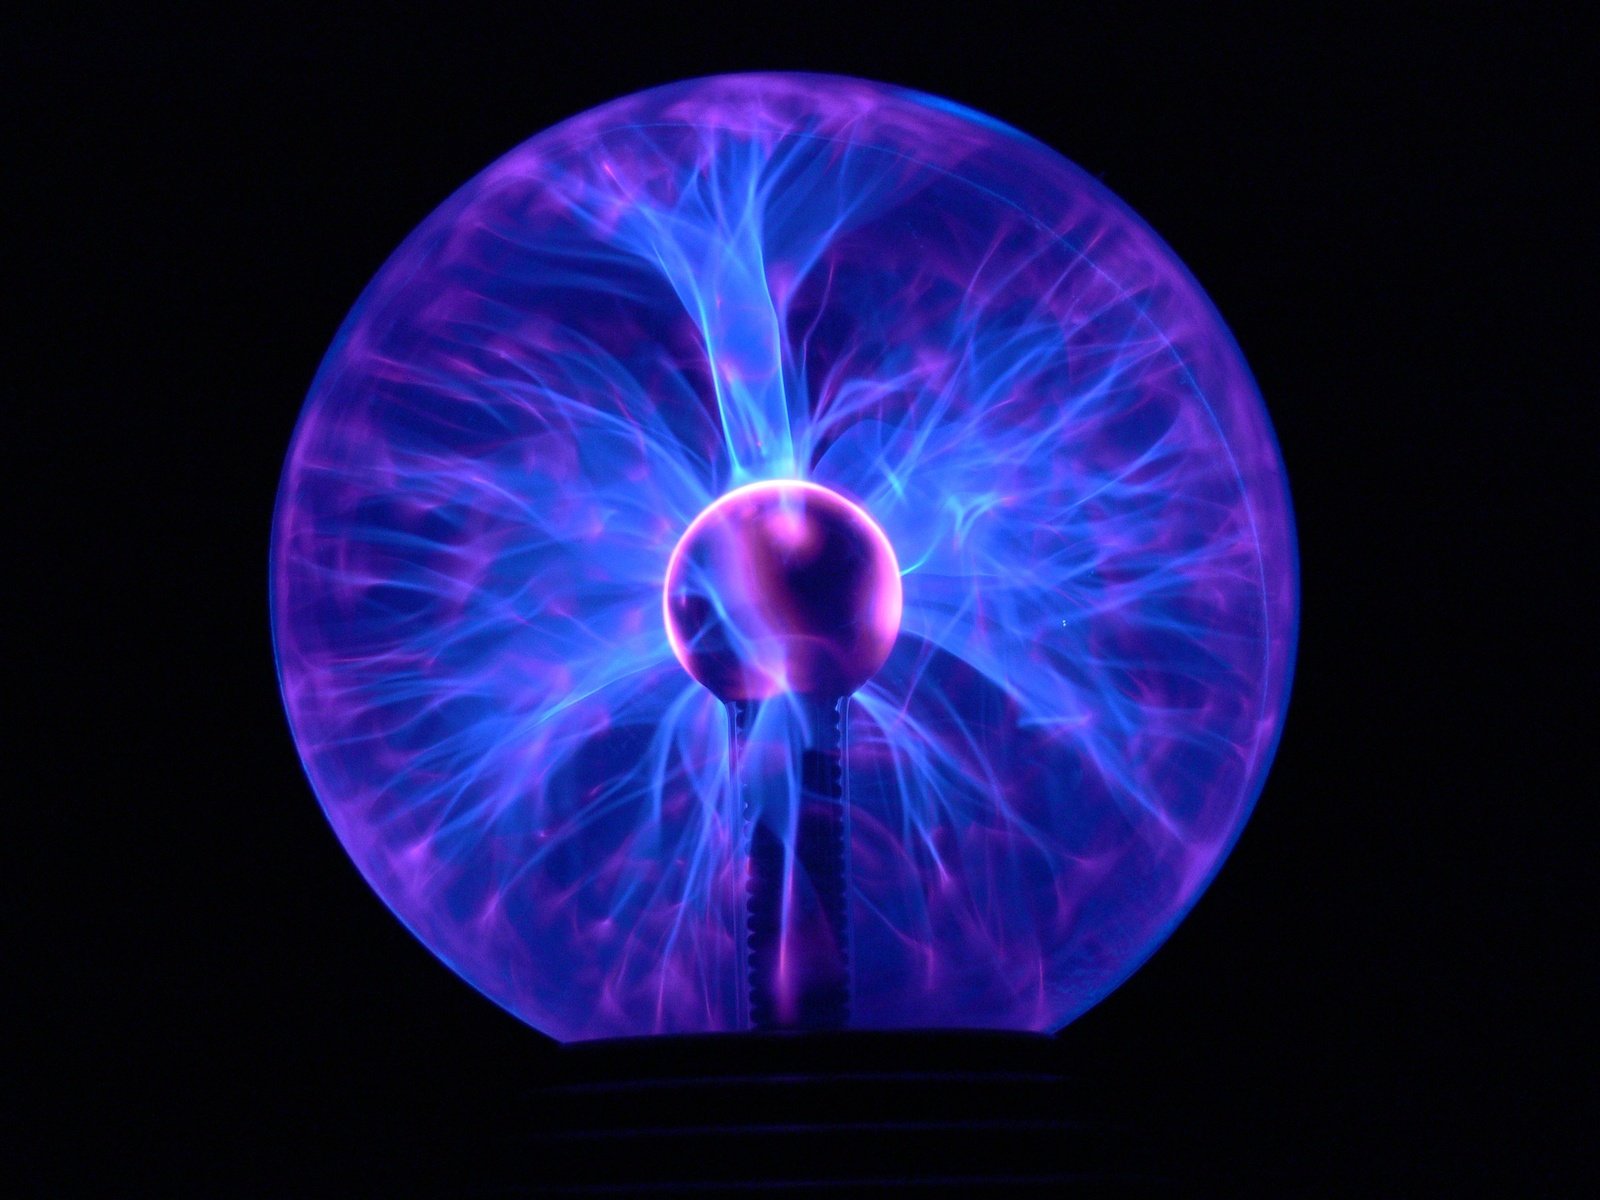 a circular purple object lit up at night